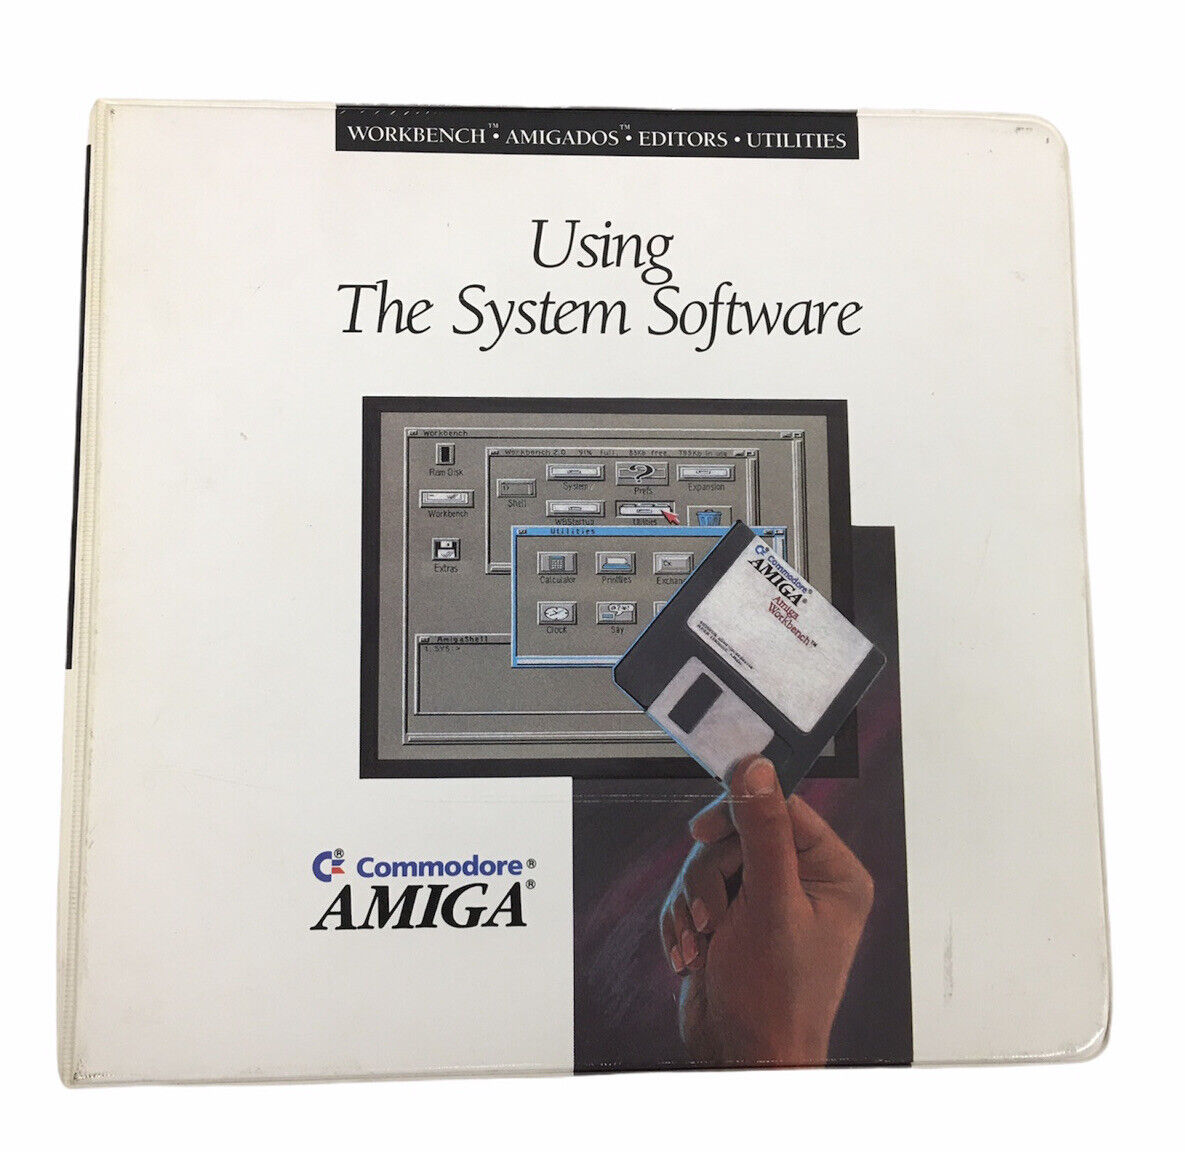 Commodore Amiga | System Software 2.05 Manual & Software Workbench AmigaDOS